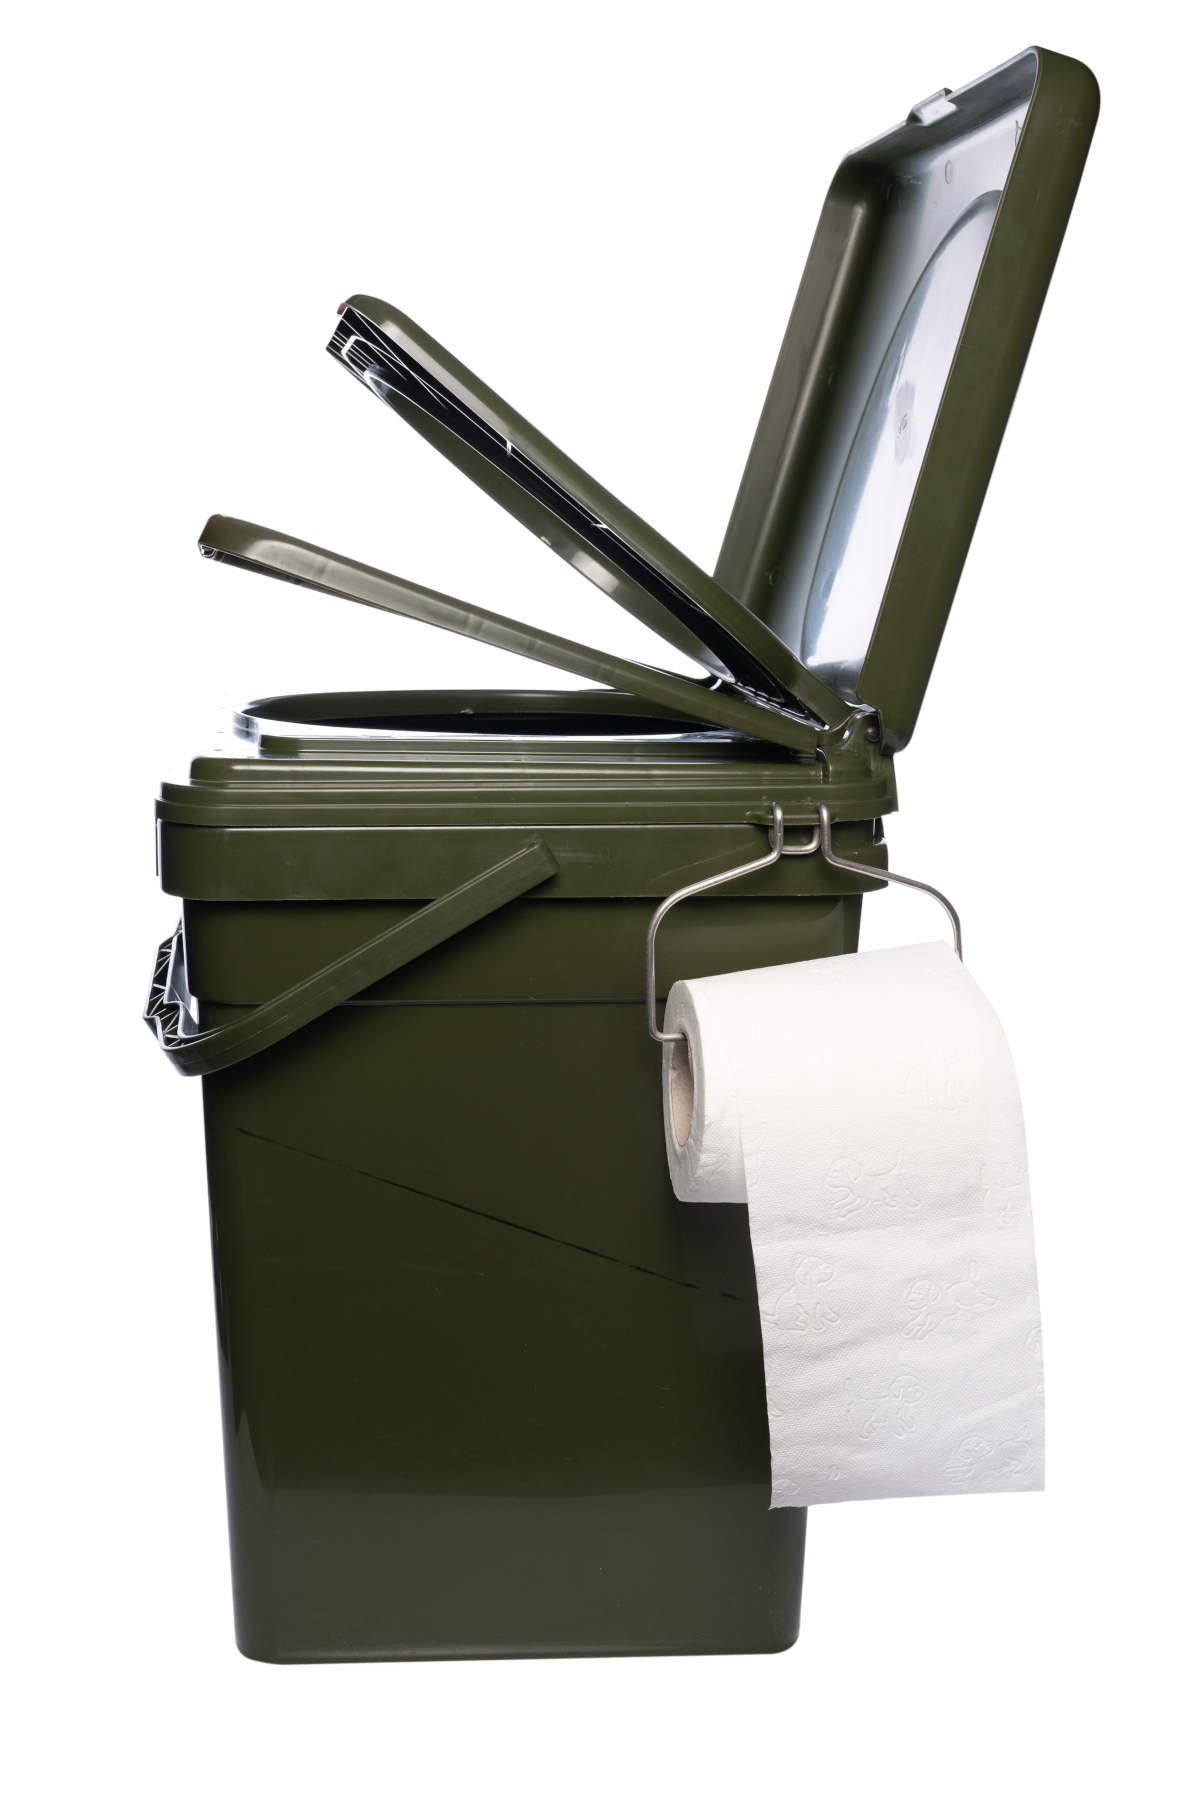 Ridgemonkey Cozee Toilet Seat Full Kit